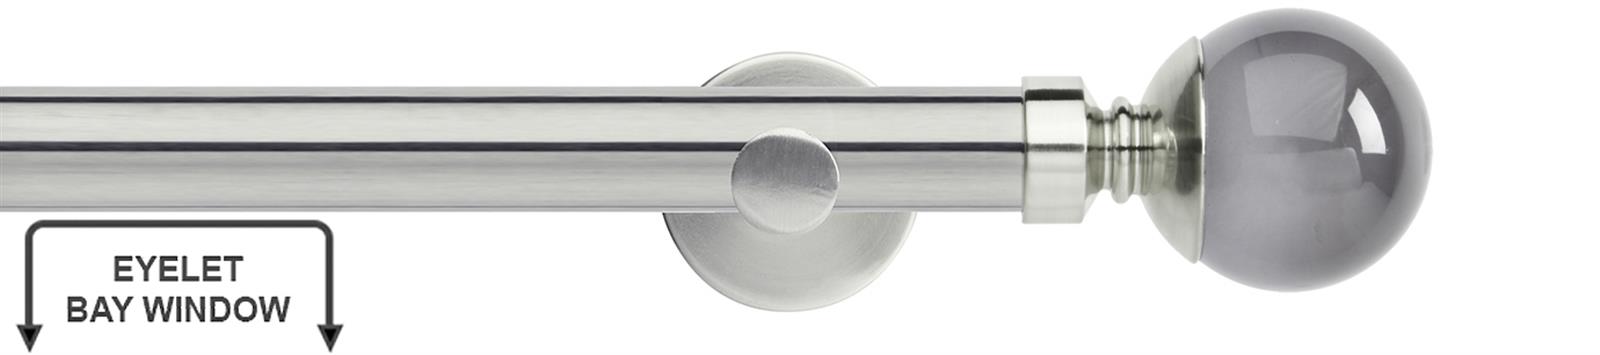 Neo Premium 28mm Eyelet Bay Window Pole Stainless Steel Smoke Grey Ball